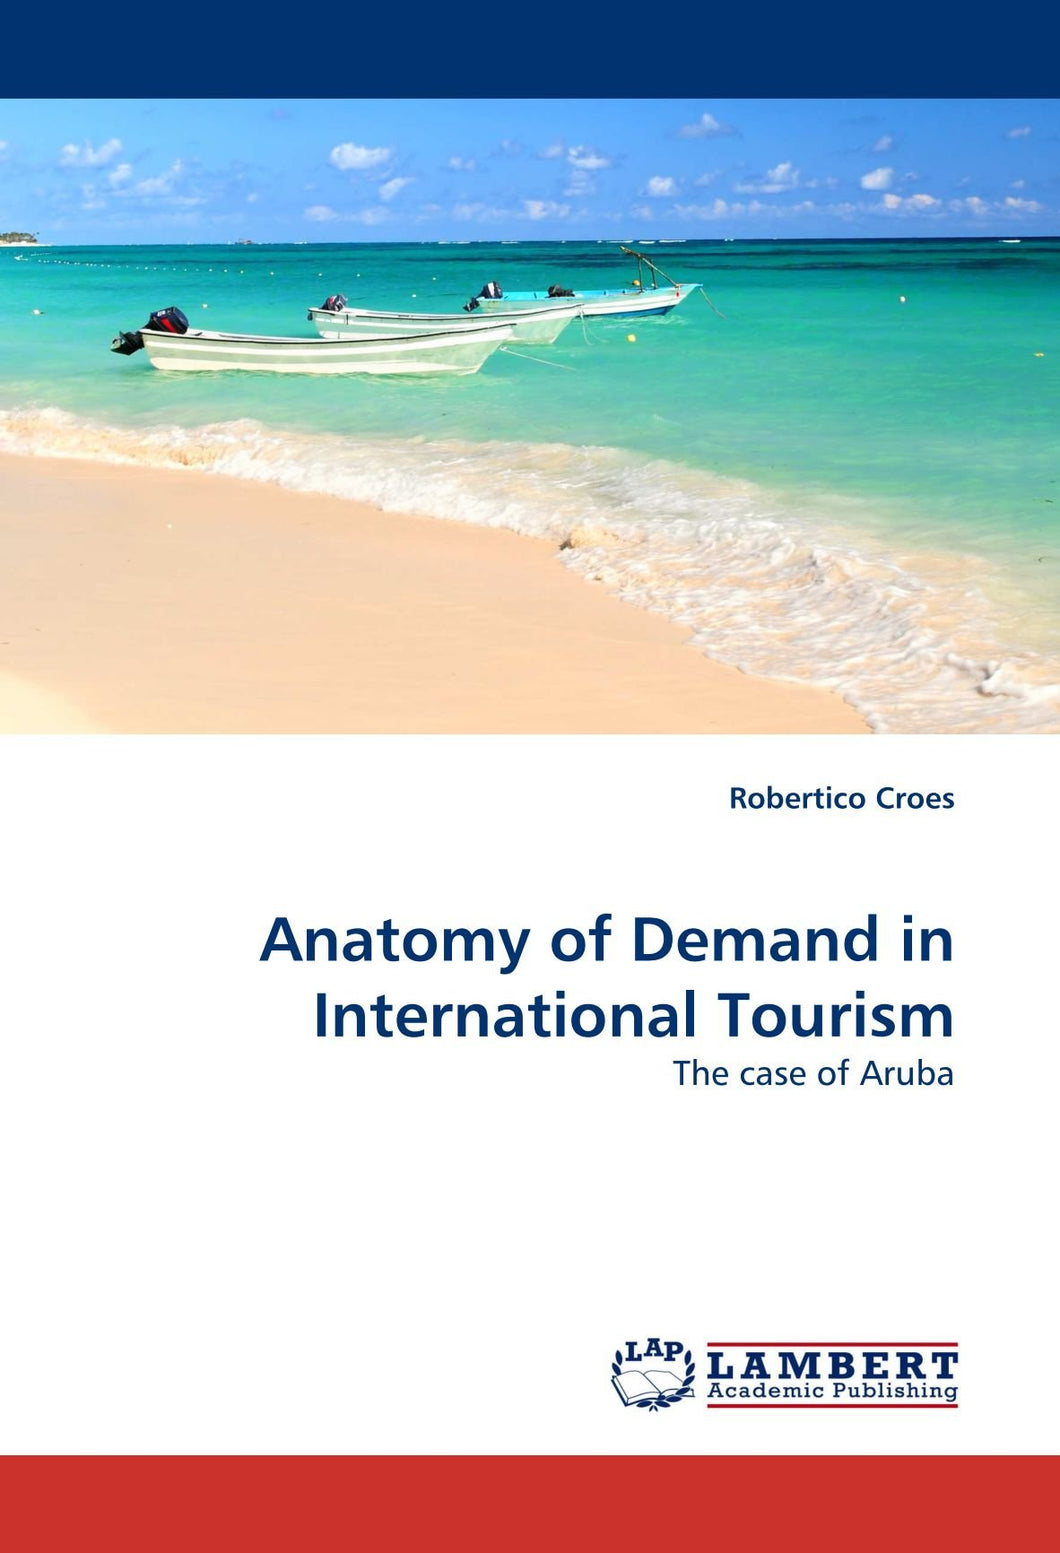 Anatomy of Demand in International Tourism: The case of Aruba